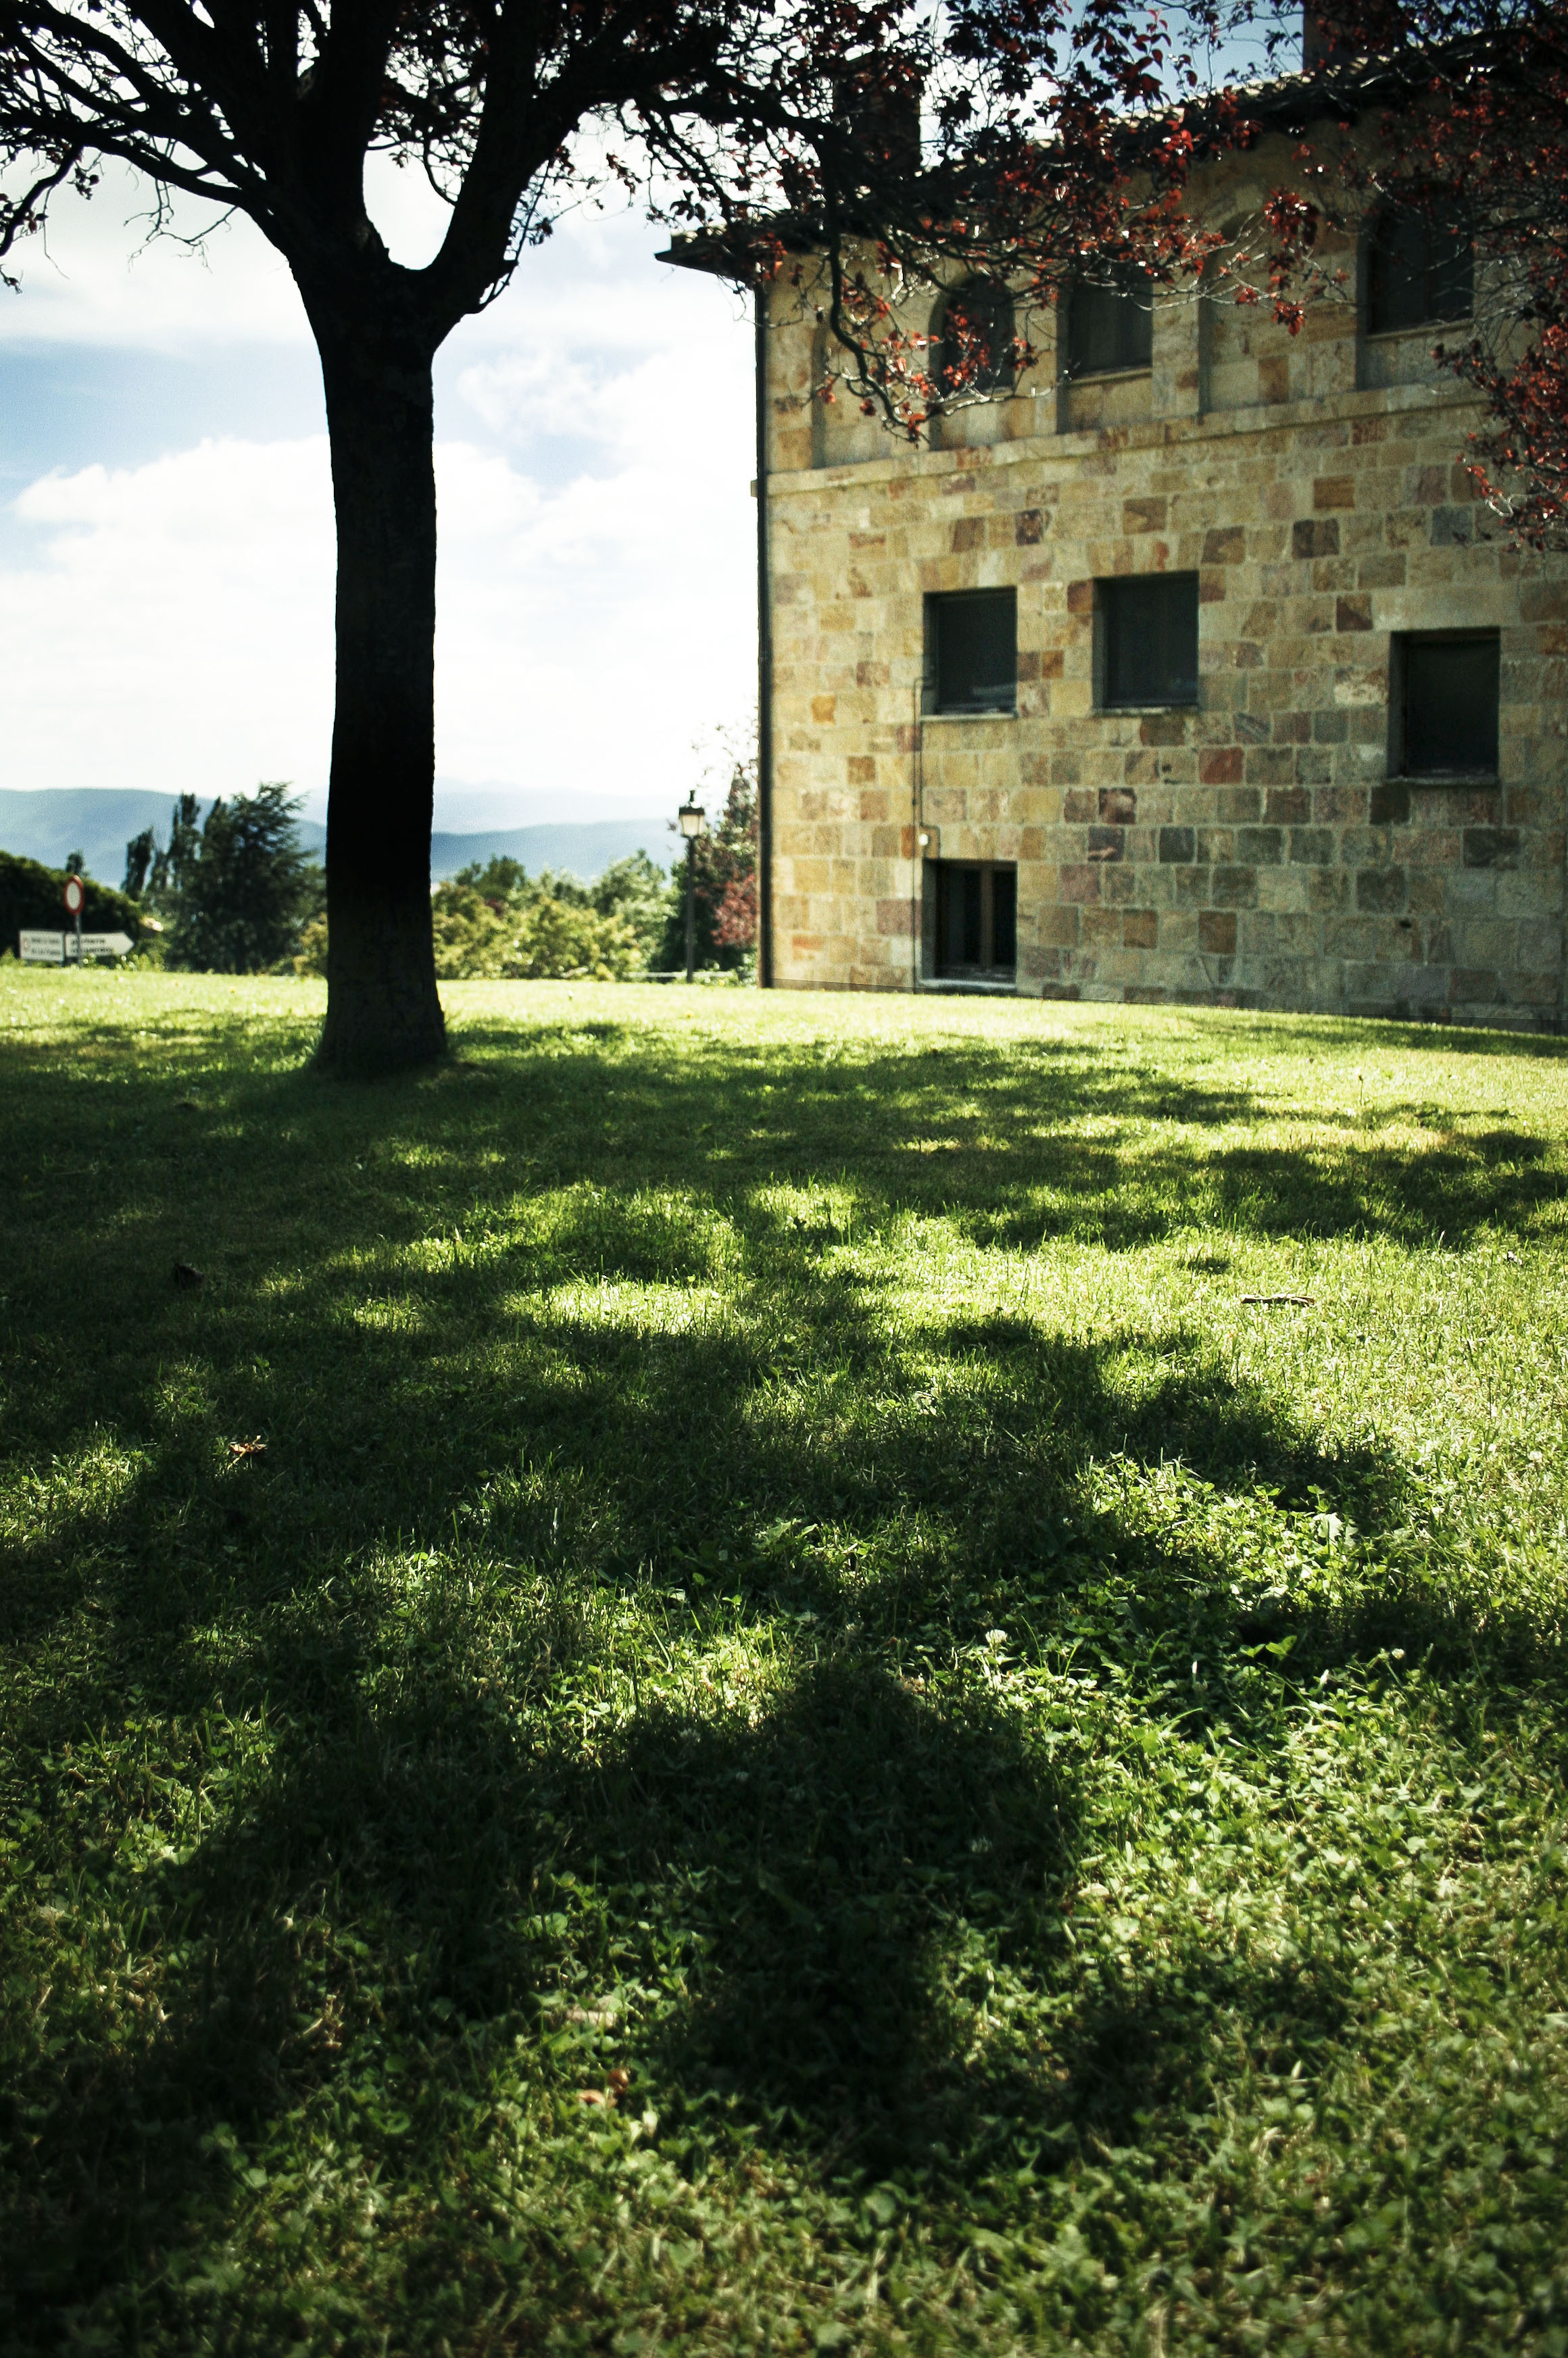 Free photo: Tree shadow - Architecture, Monastery, Tree - Free Download